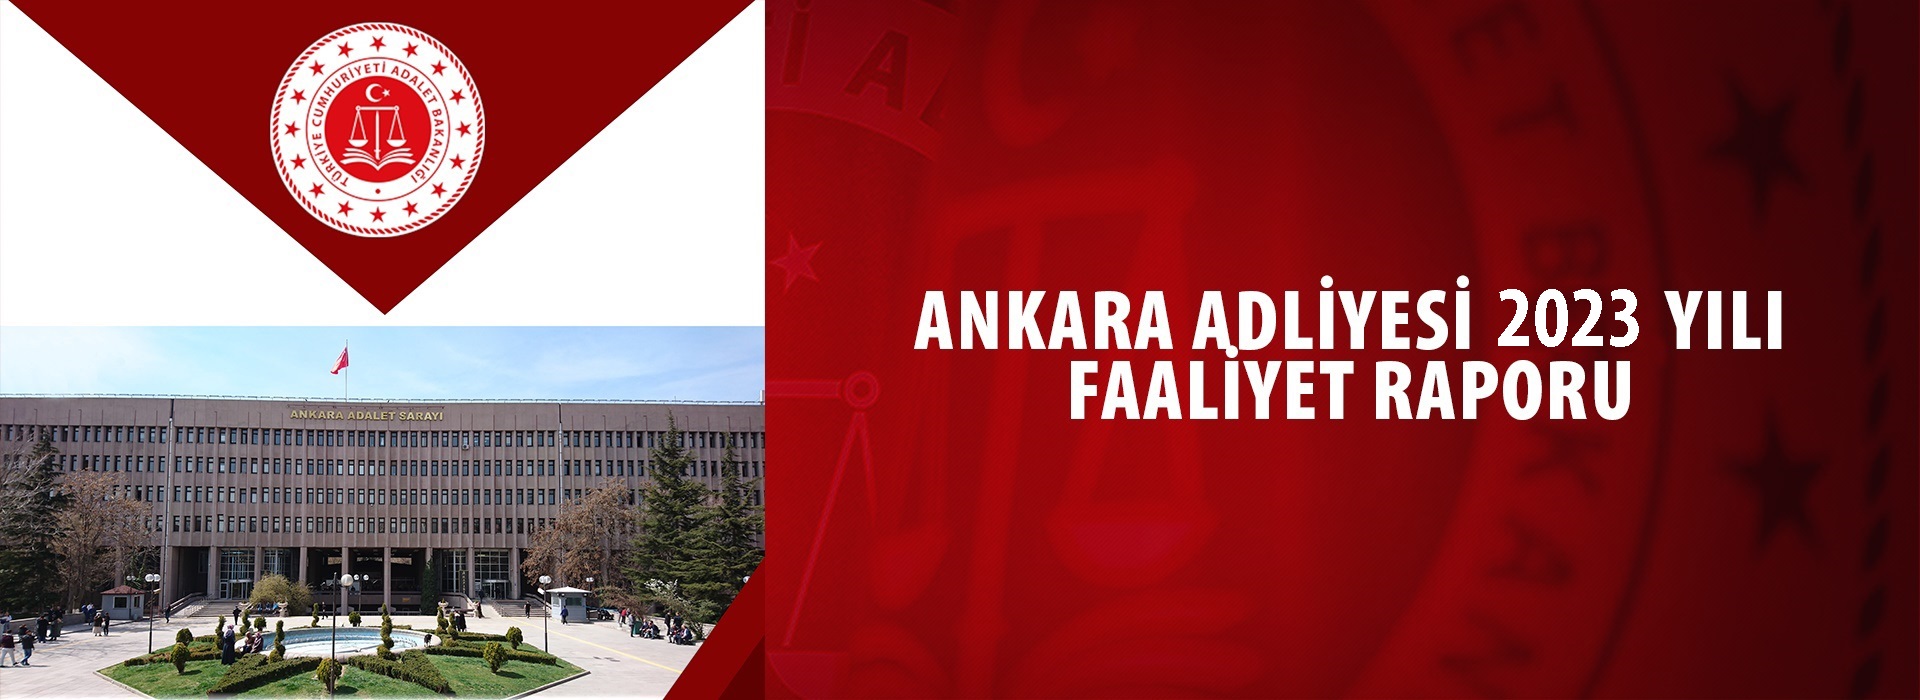 Ankara Adliyesi 2023 Yılı Faaliyet Raporu